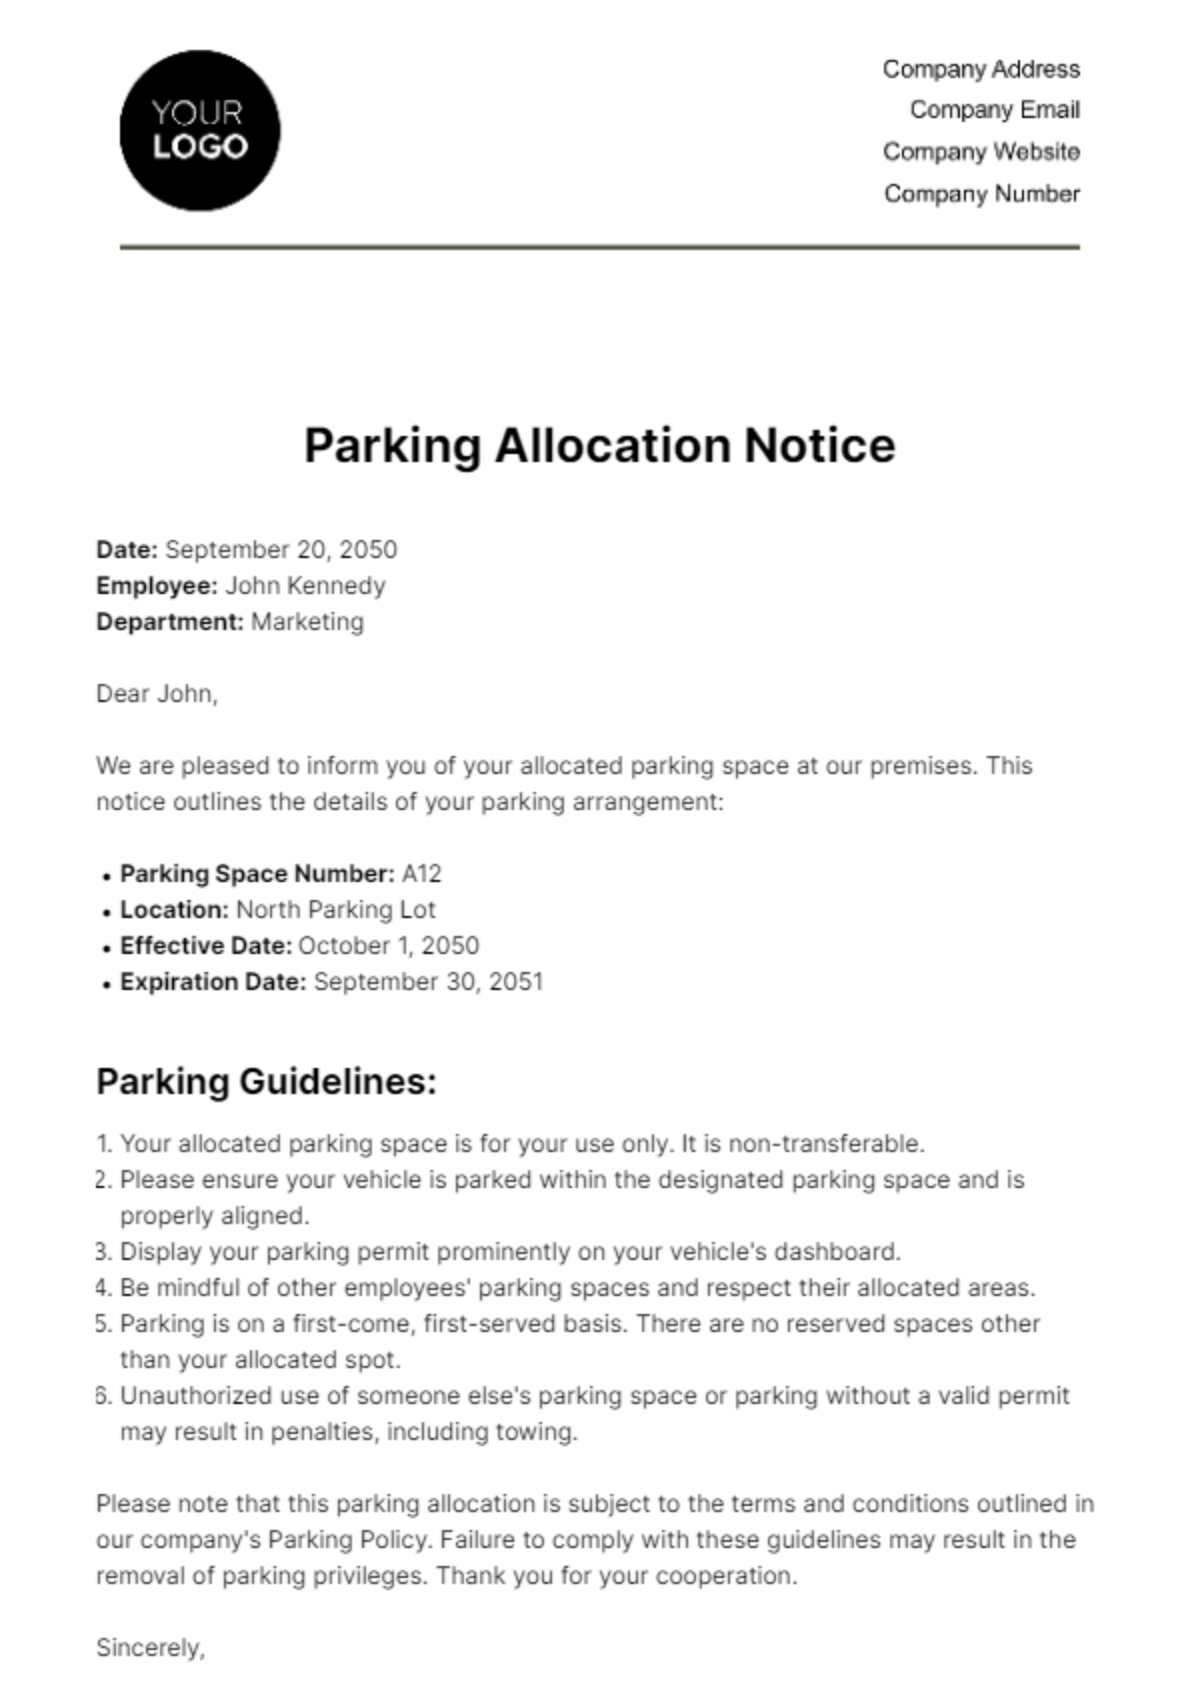 Parking Allocation Notice HR Template